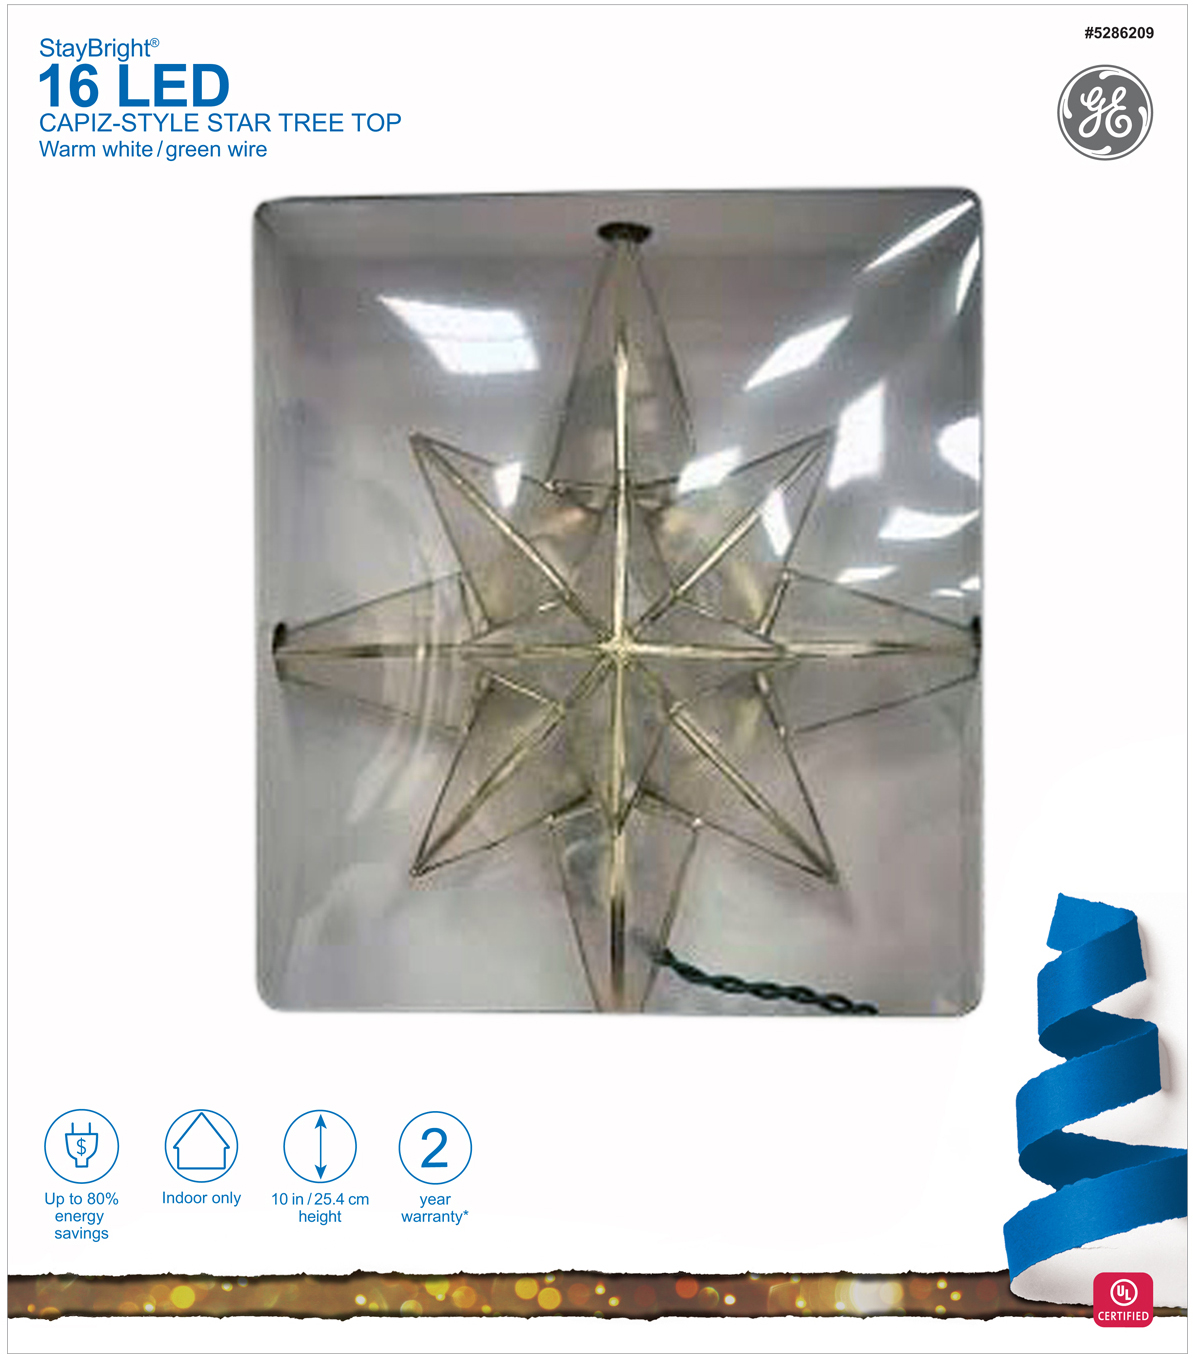 71406 - GE StayBright® LED Capiz-Style Star Tree Top, 16ct, Warm 